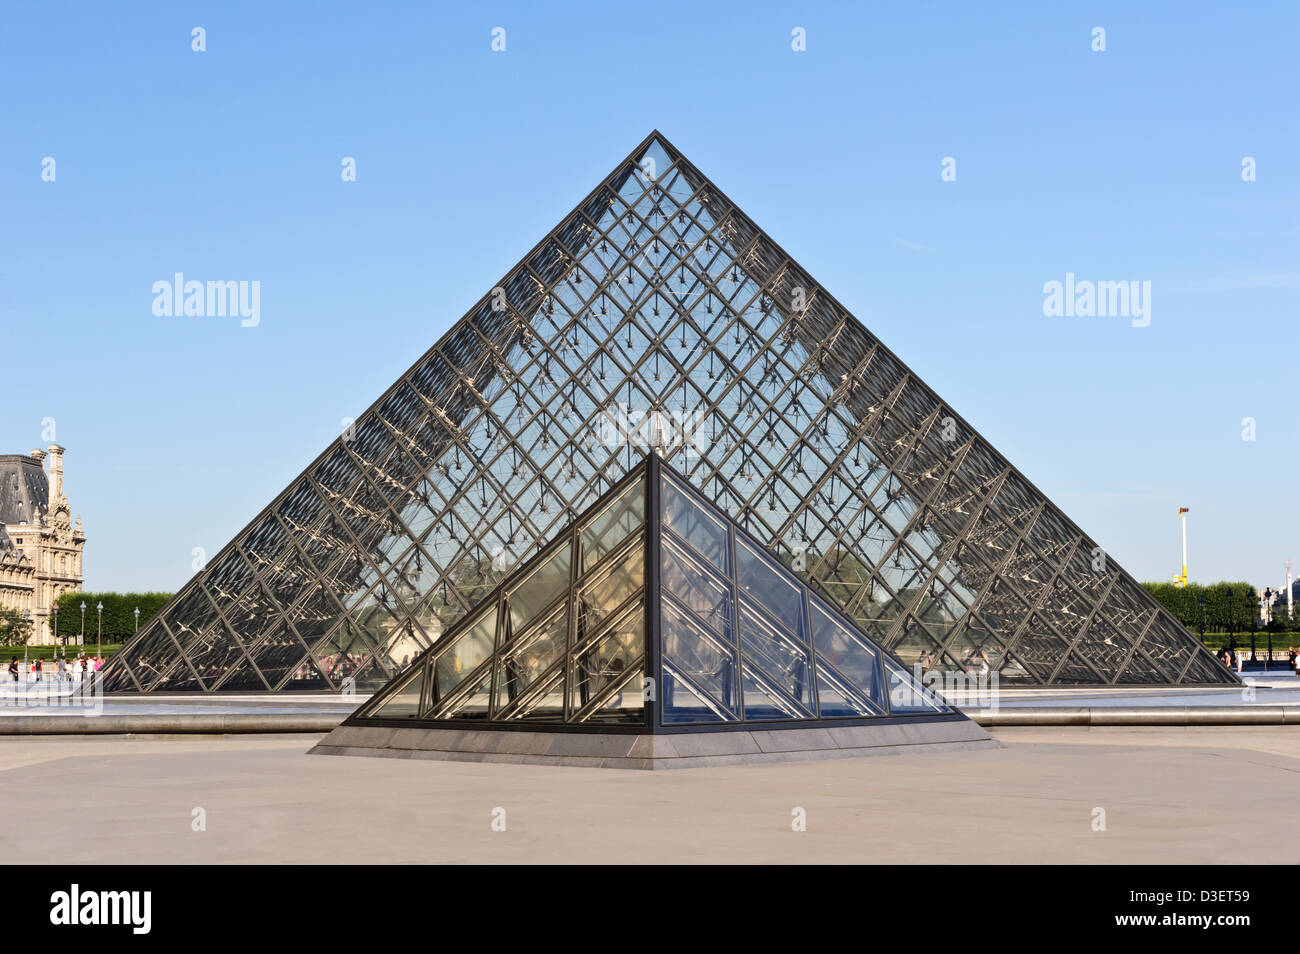 Glass pyramids at Louvre museum, Paris, France. Stock Photo